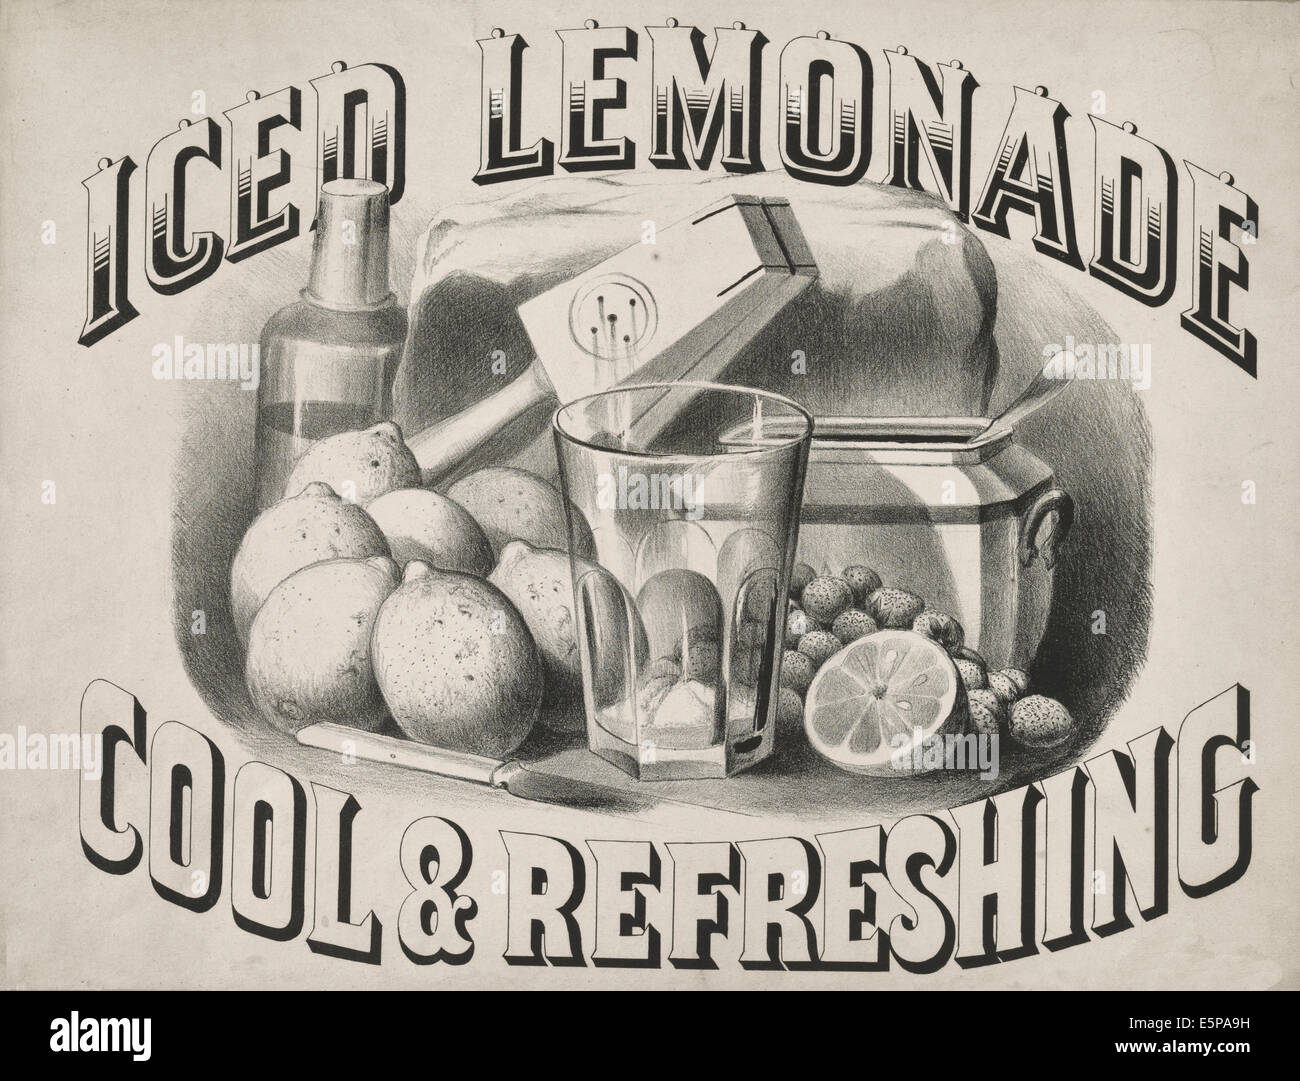 Iced lemonade: cool & refreshing - vintage advertisement poster, circa 1879 Stock Photo